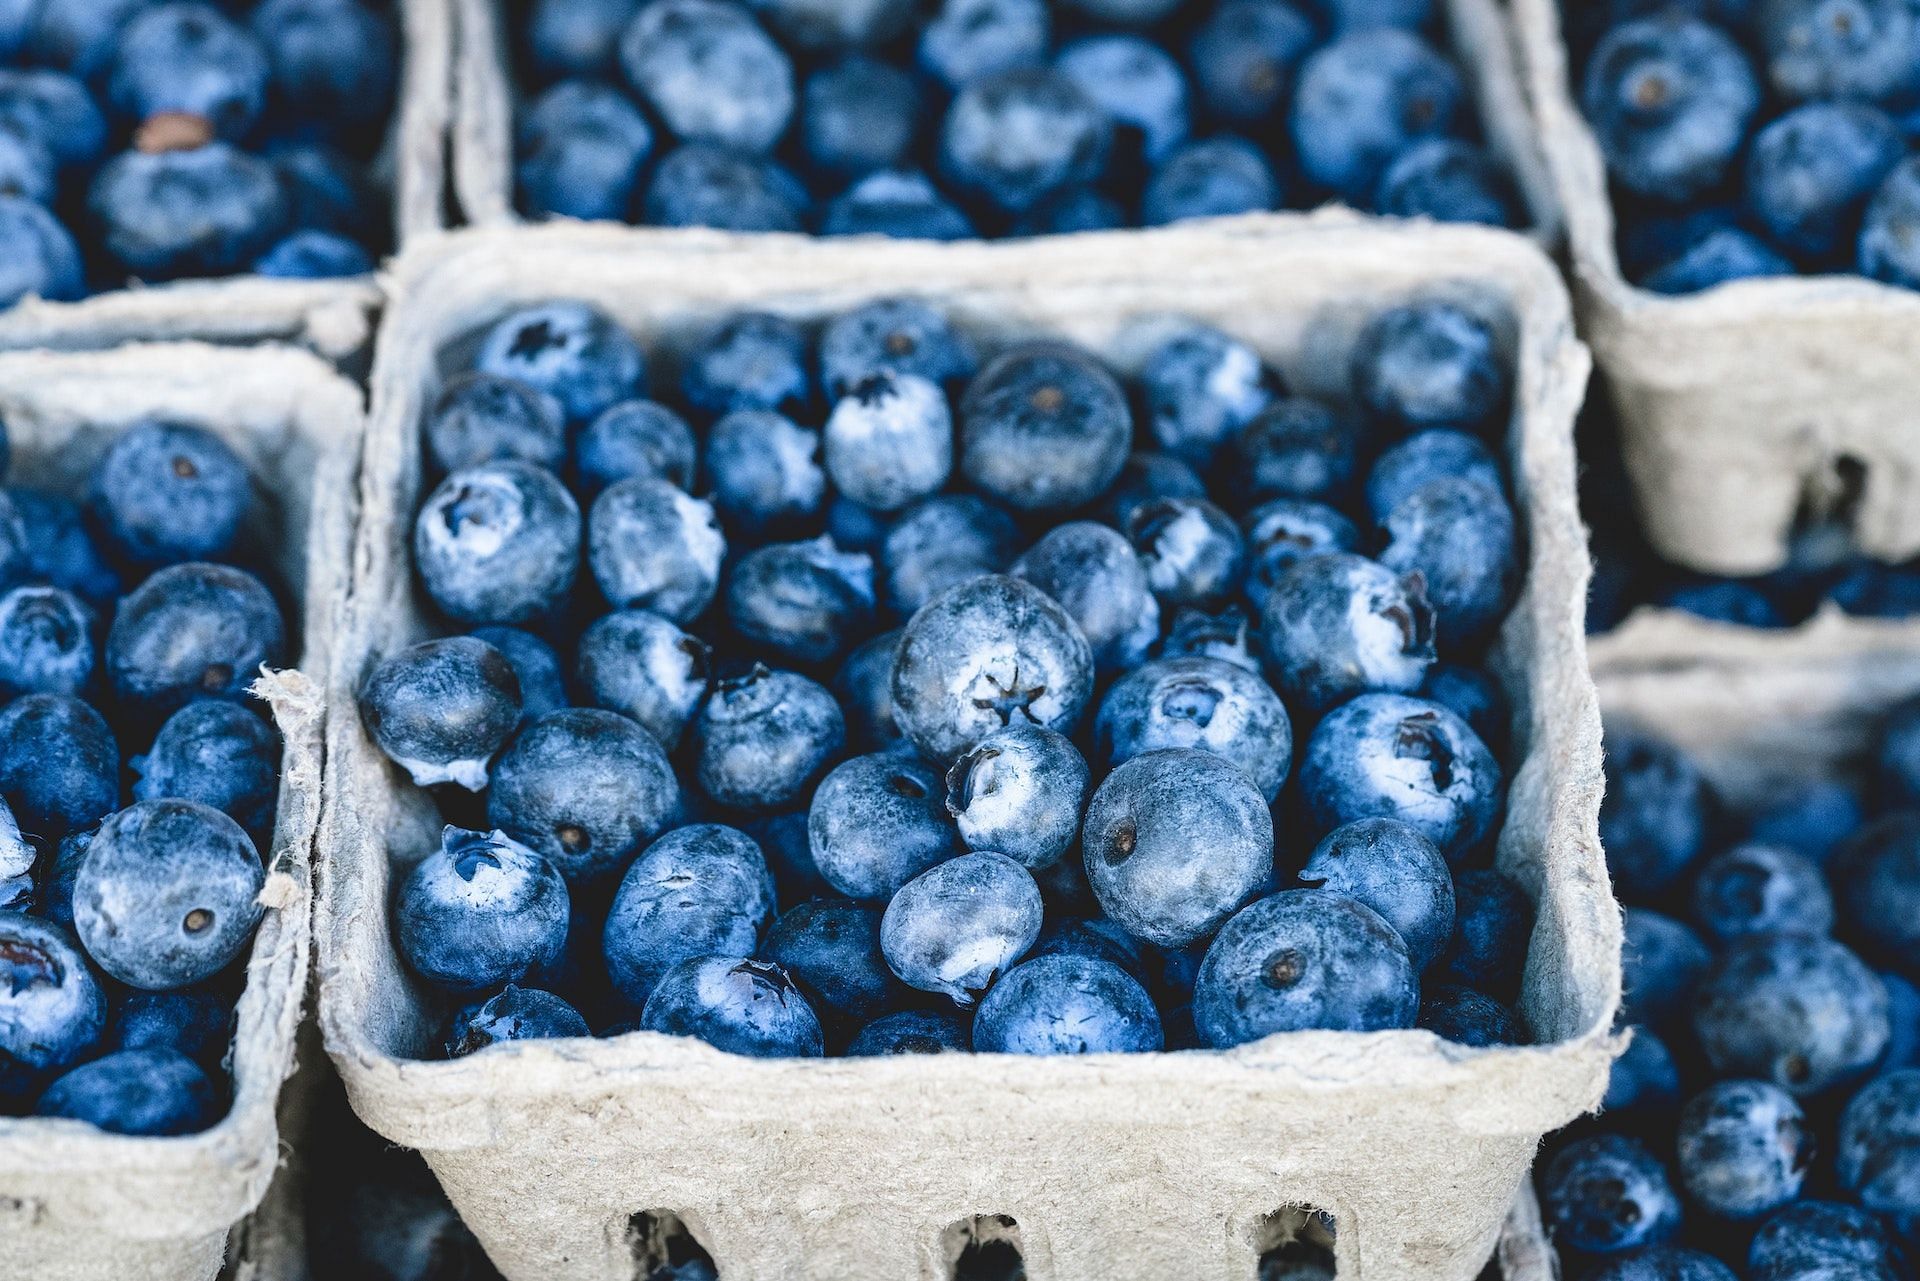 Blueberries are good for the kidneys. (Photo via Pexels/veeterzy)